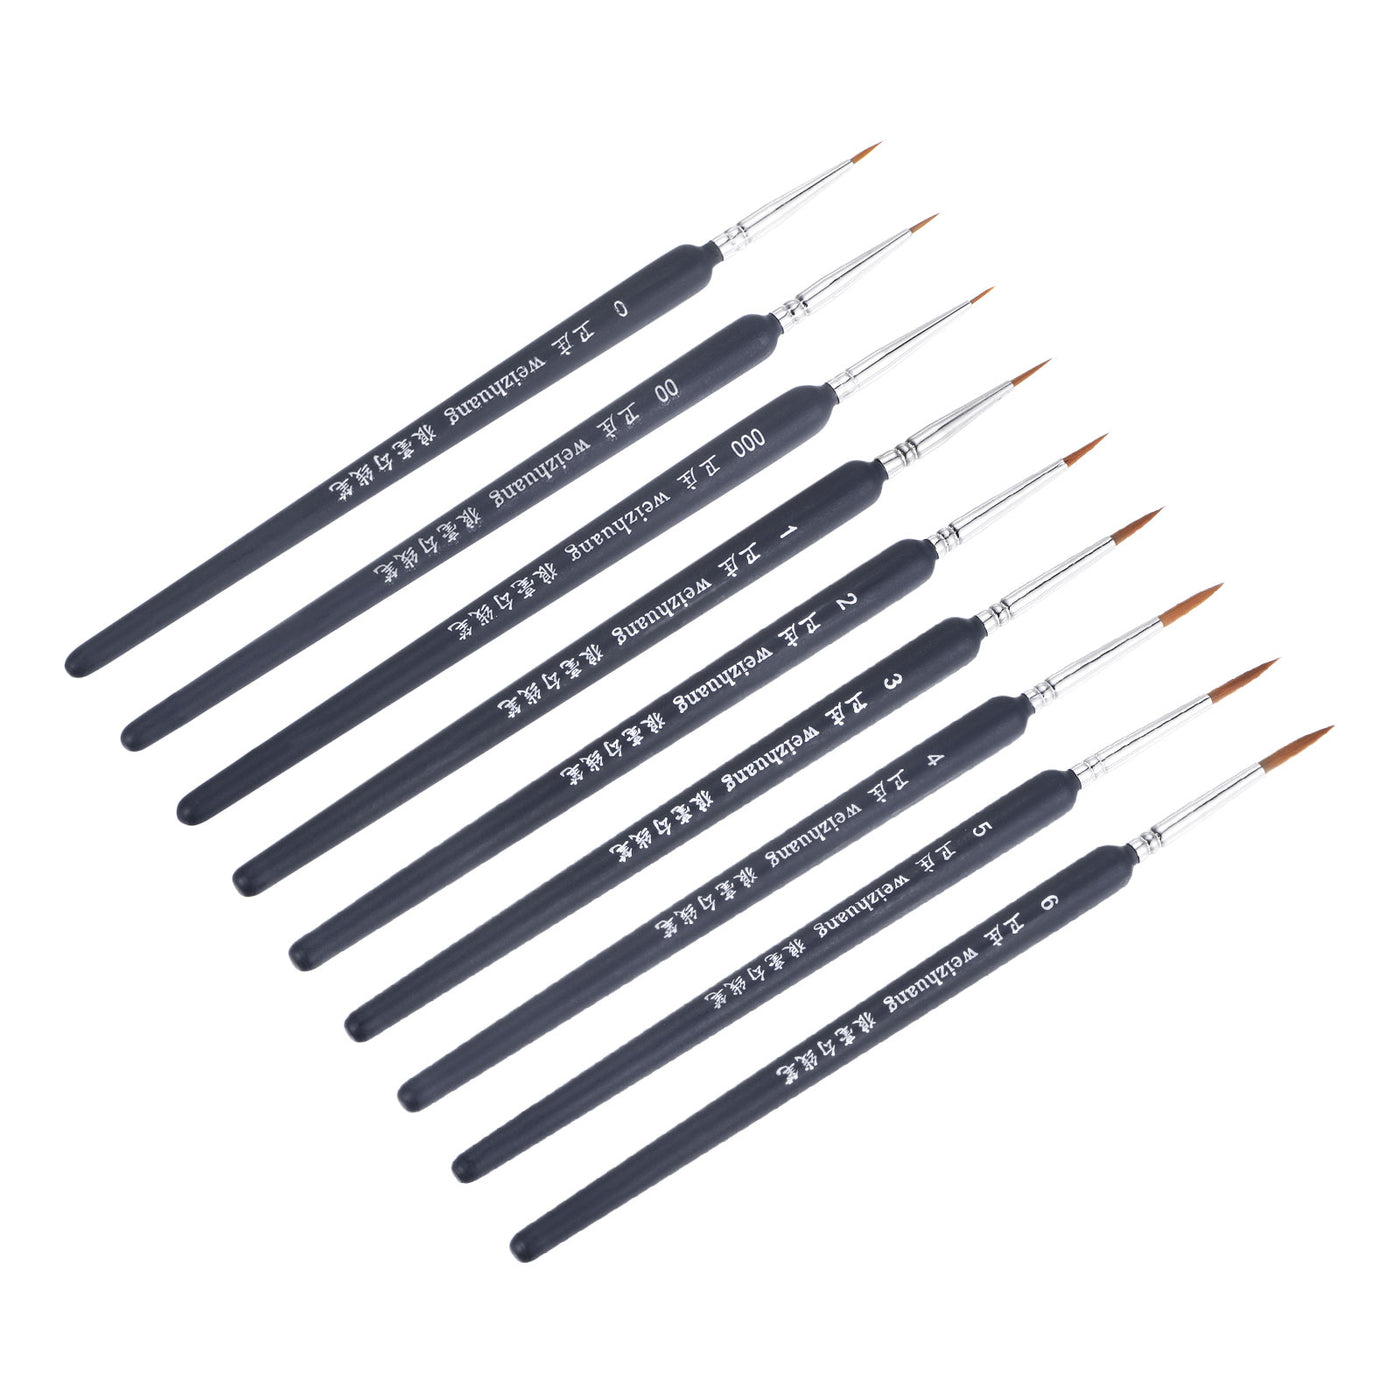 Uxcell Uxcell Detailing Paint Brush Set Pointed Bristle Blue Wood Handle 1 Set (9Pcs)